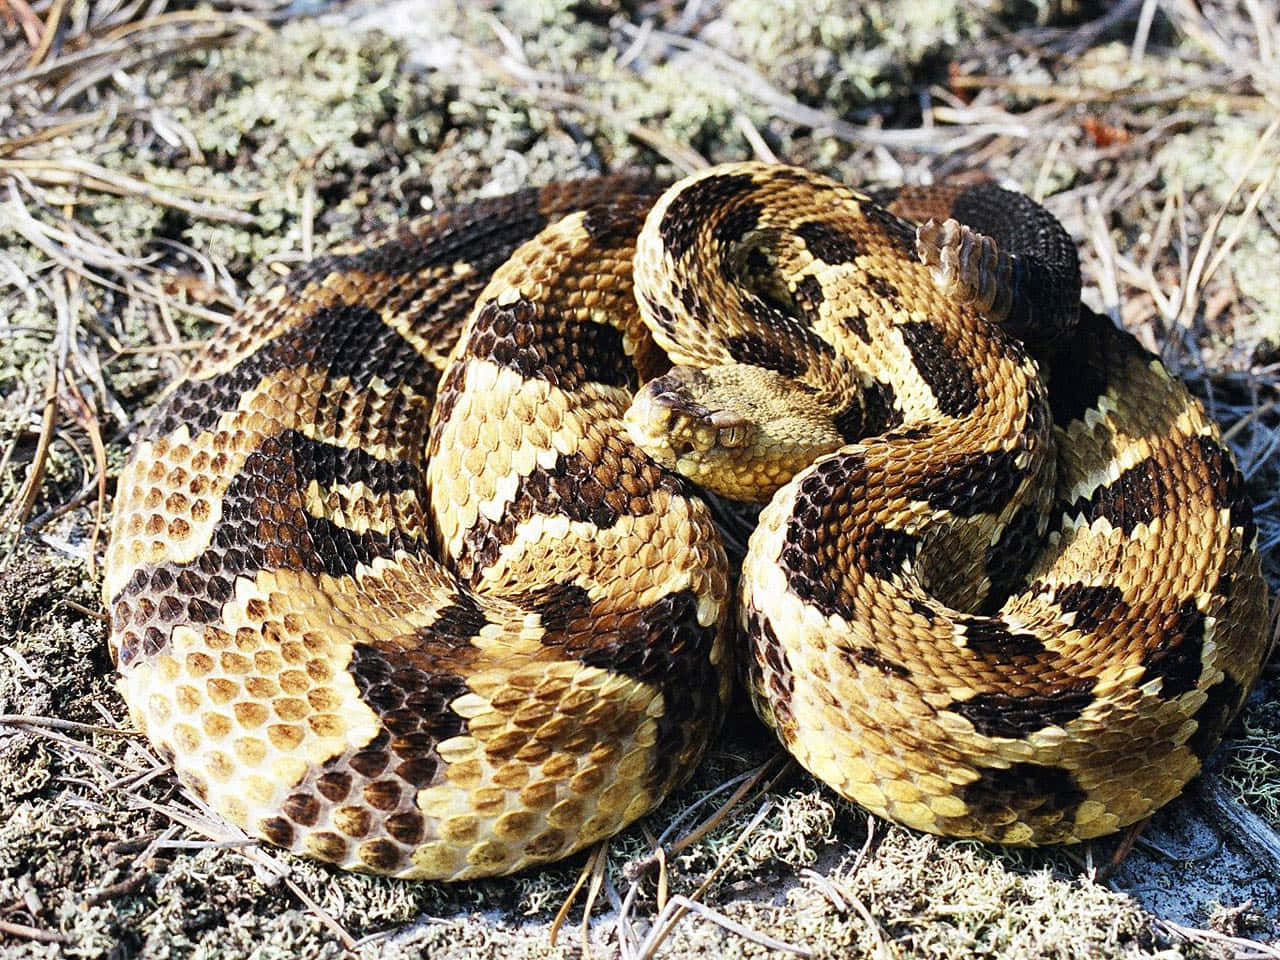 A Close-Up Shot Of A Rattlesnake